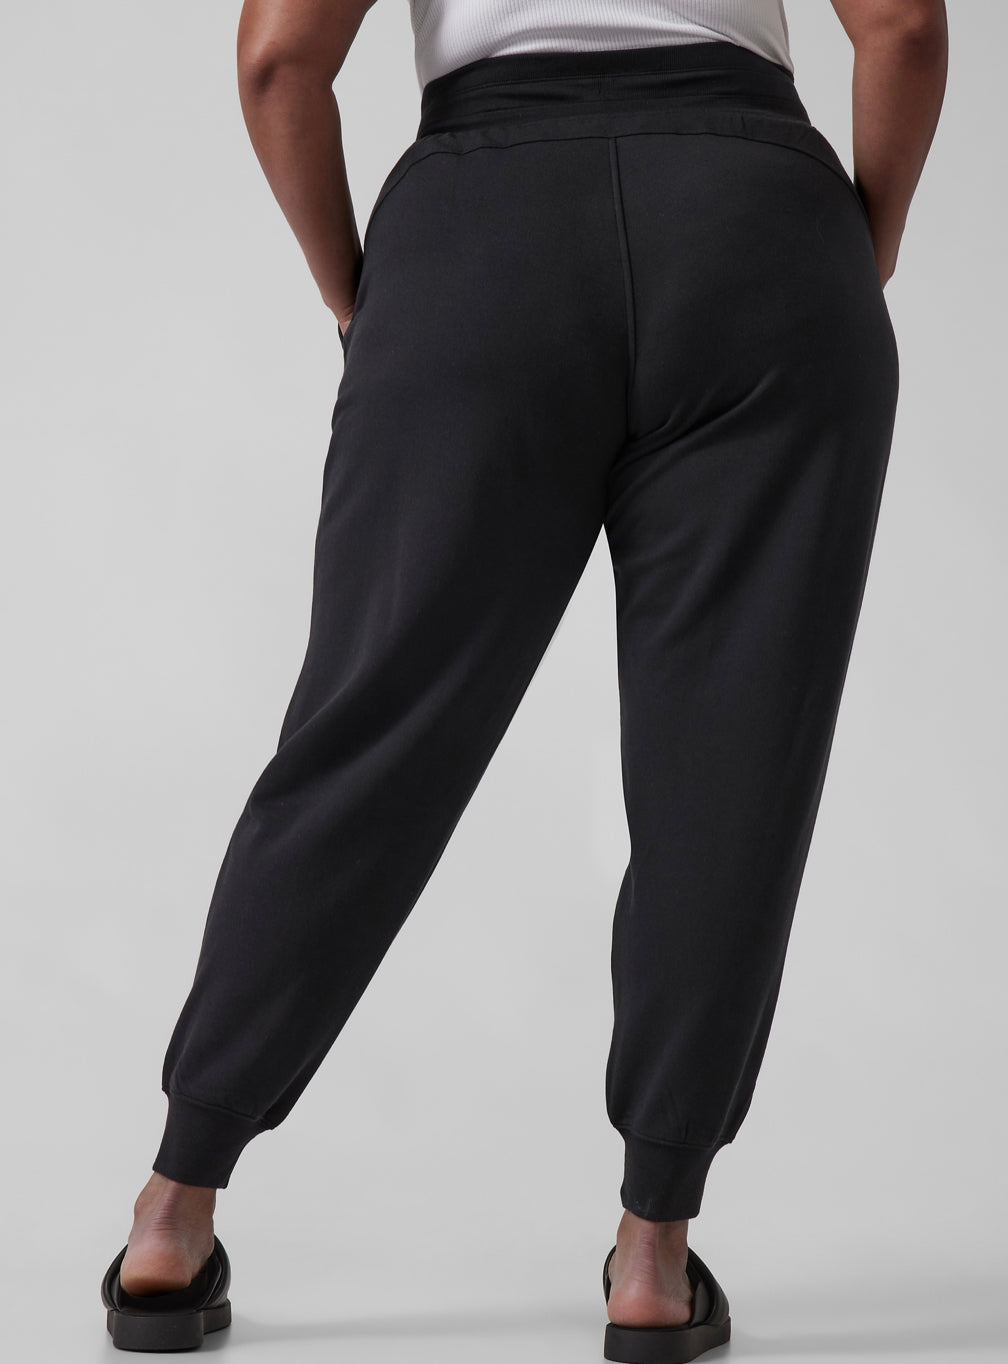 Athleta Soft Black Pockets Balance Pants XL Tall - Conseil scolaire  francophone de Terre-Neuve et Labrador